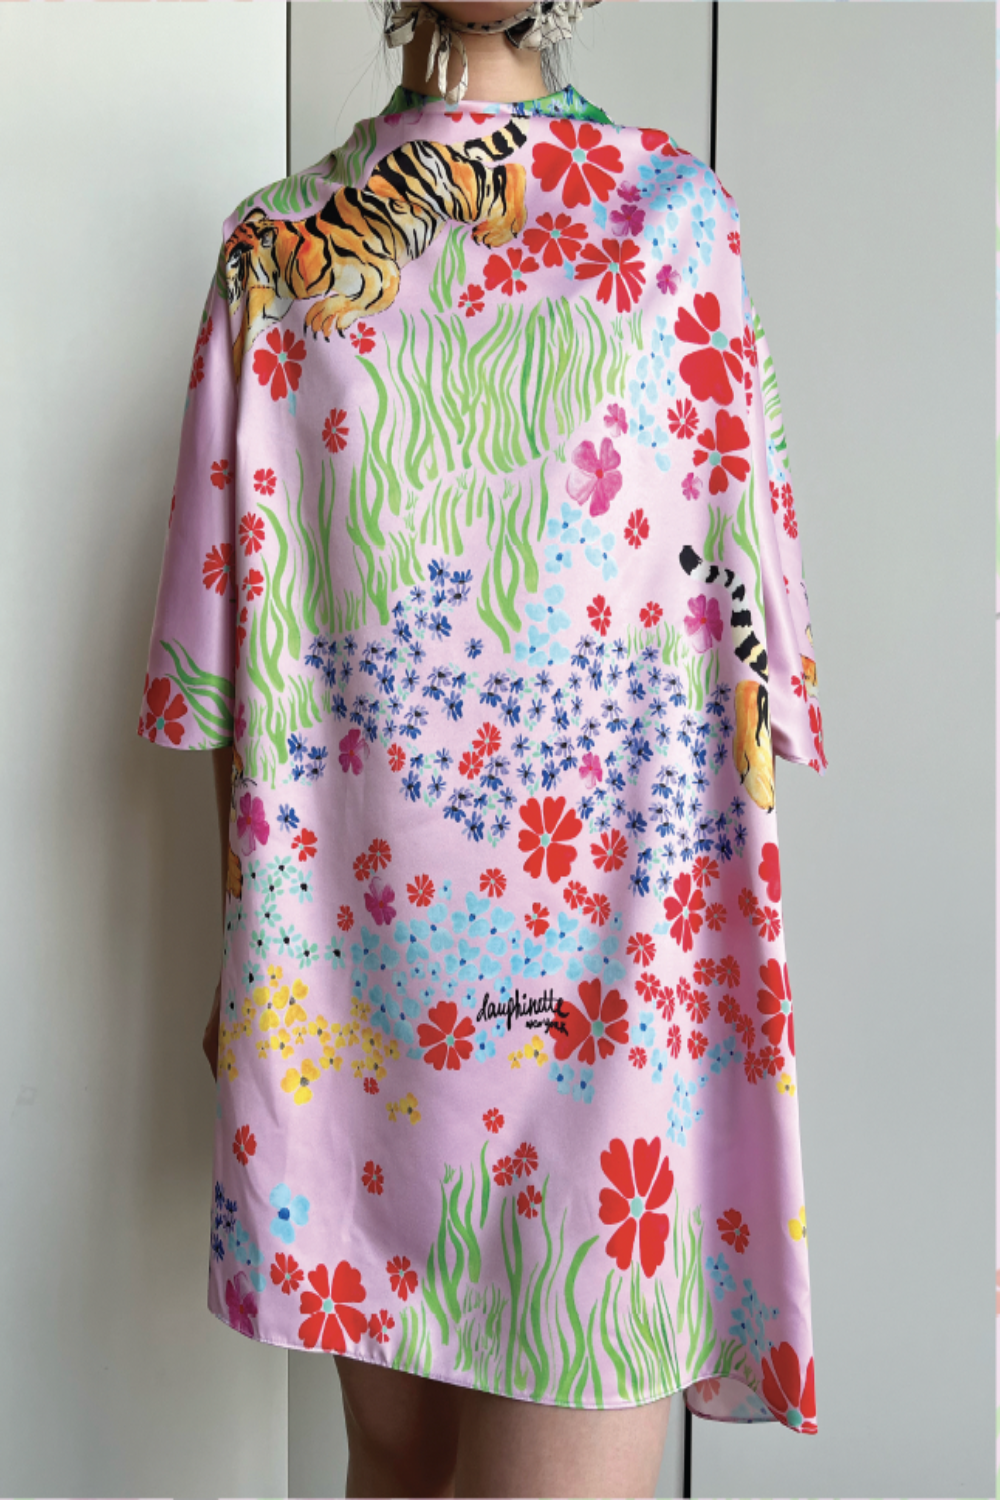 Dauphinette - Floatkerchief Mini Dress: Tiger Blooms